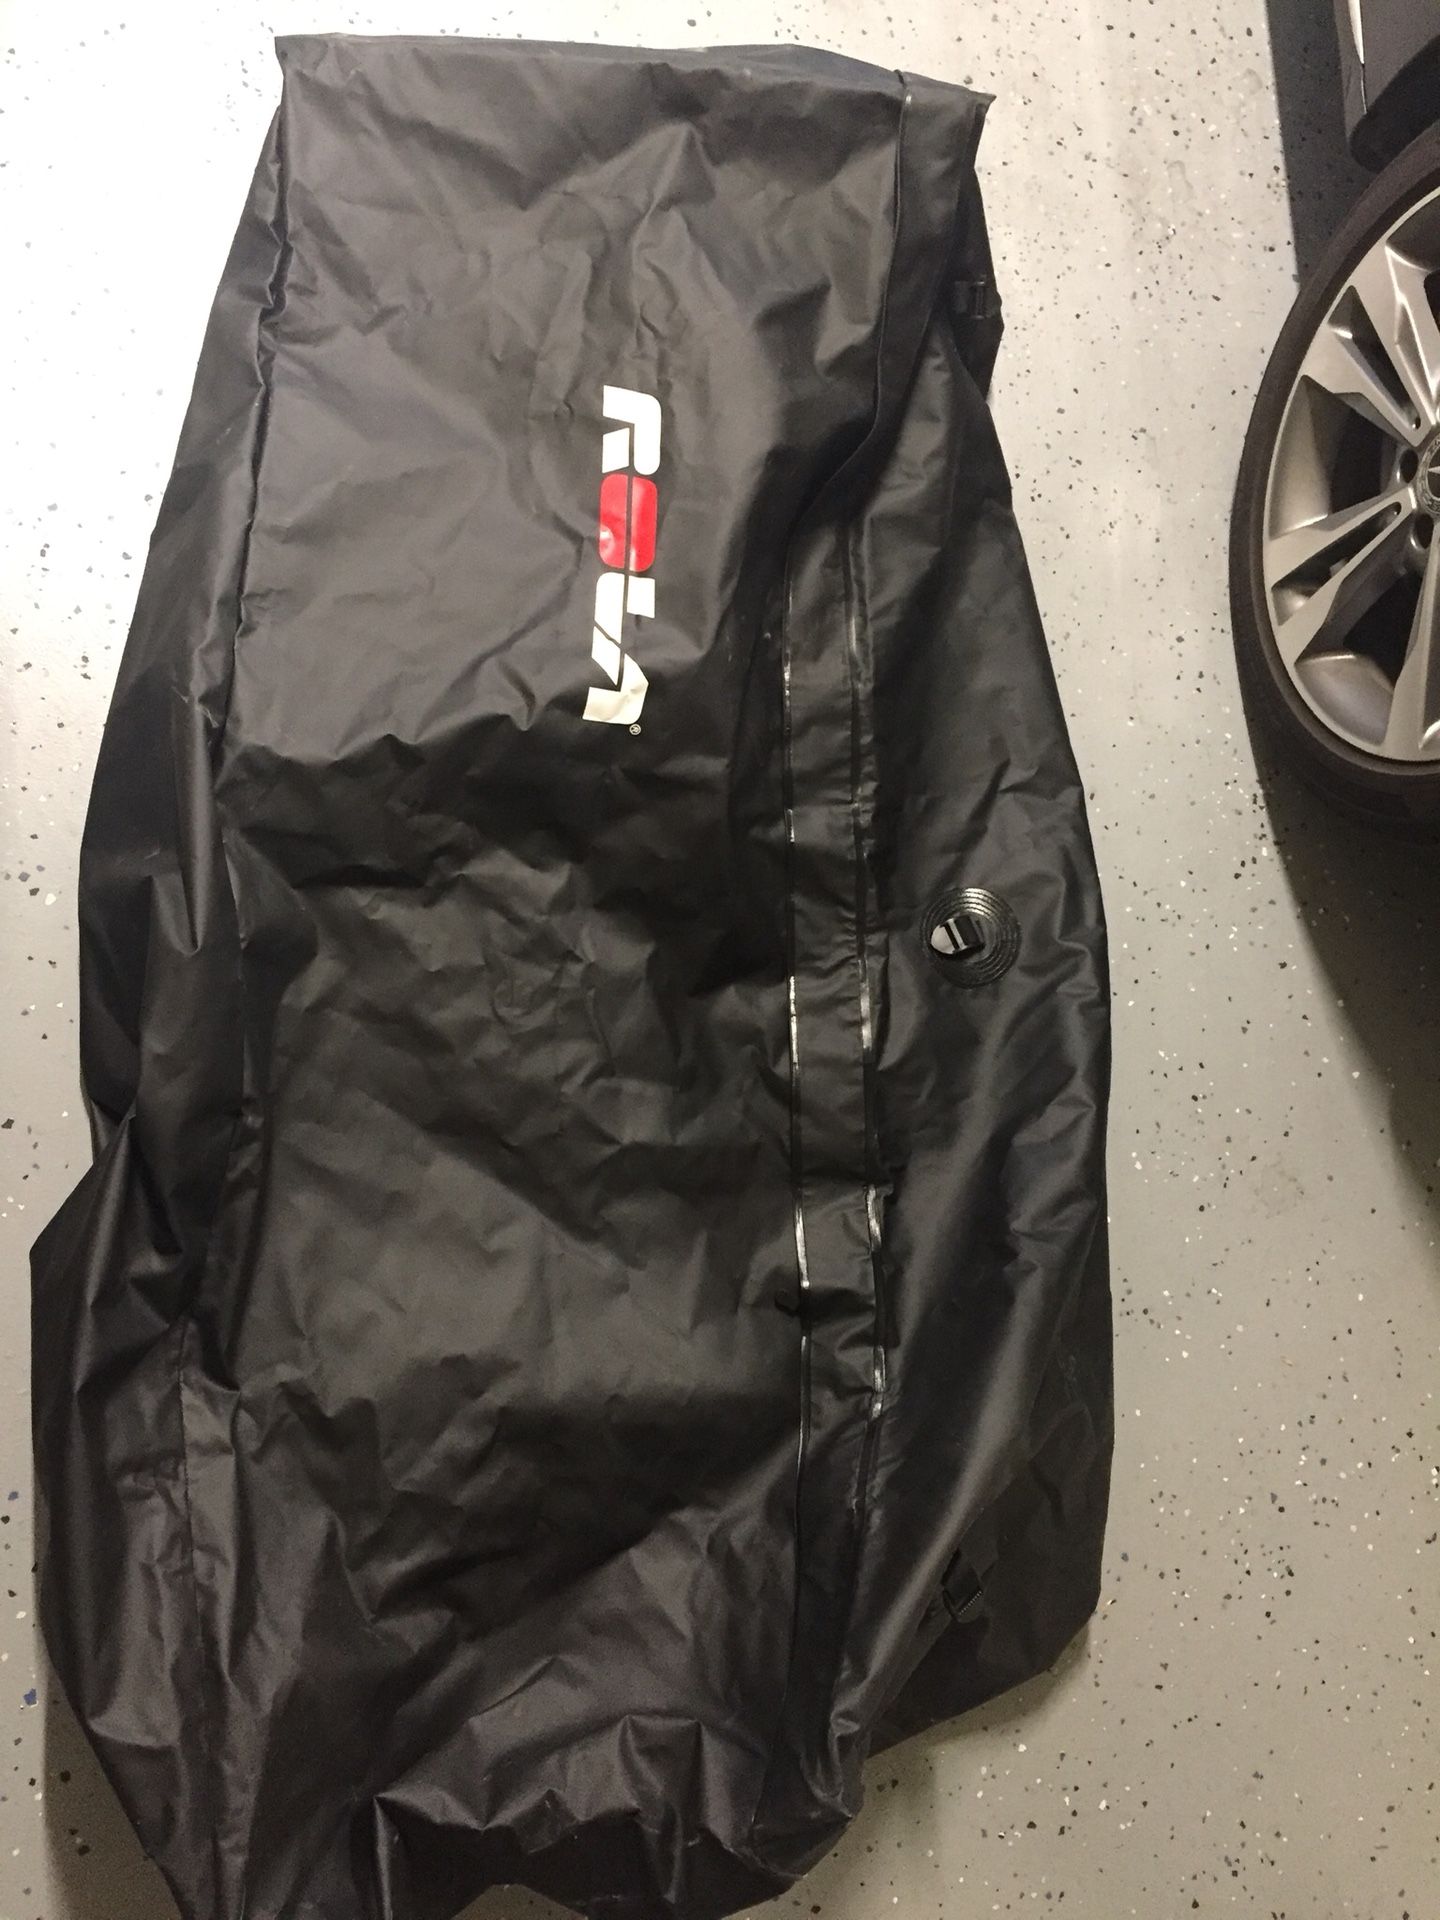 Rola large RV duffel bag